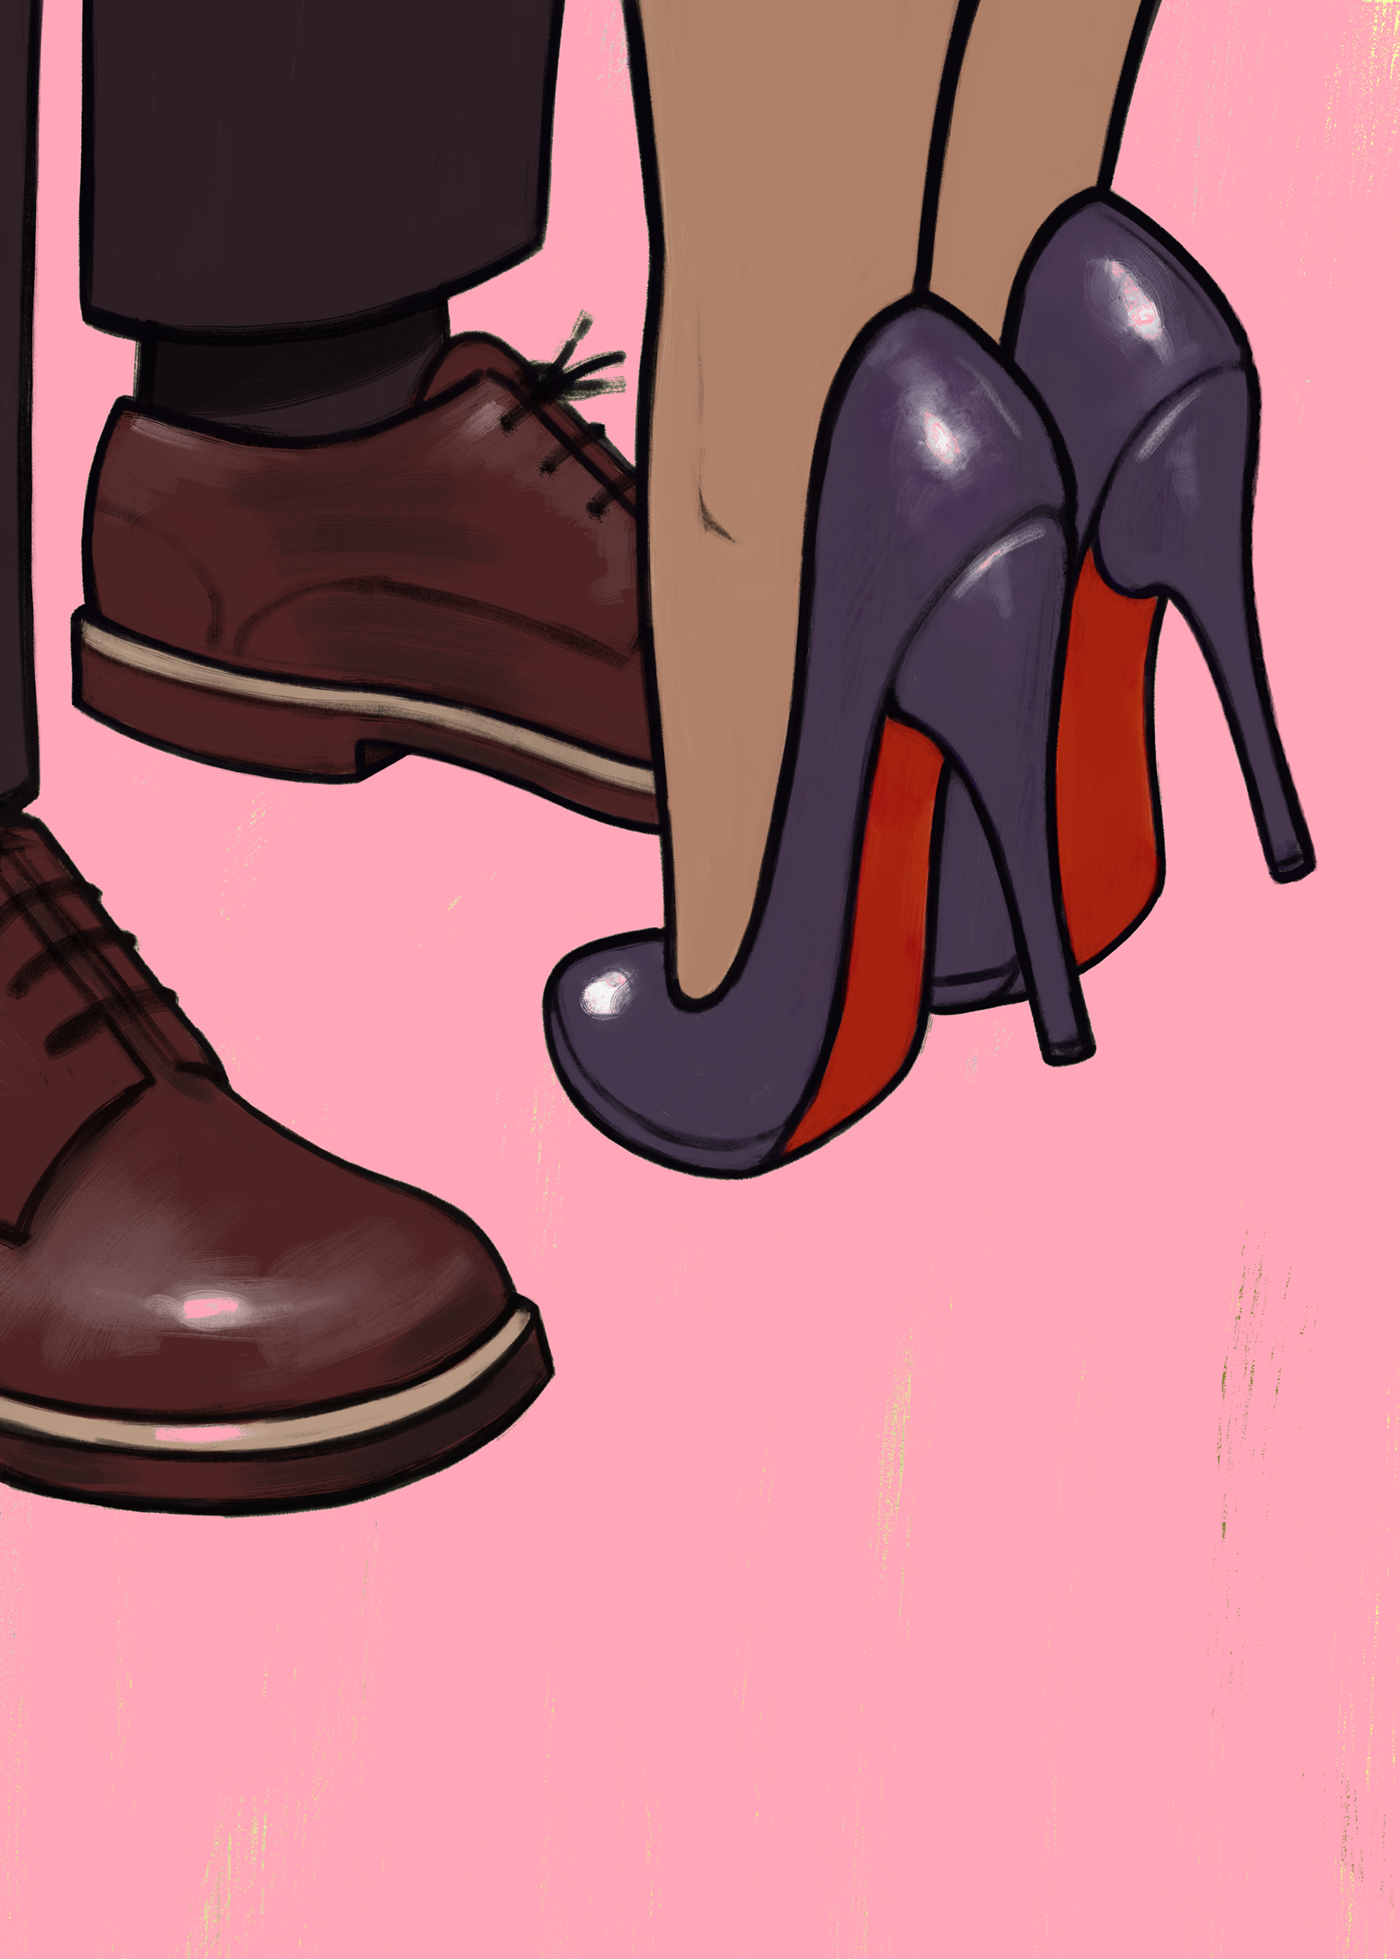 kiss ILLUSTRATION  poster tacones high heels shoes negative space valentines Classic digital illustration